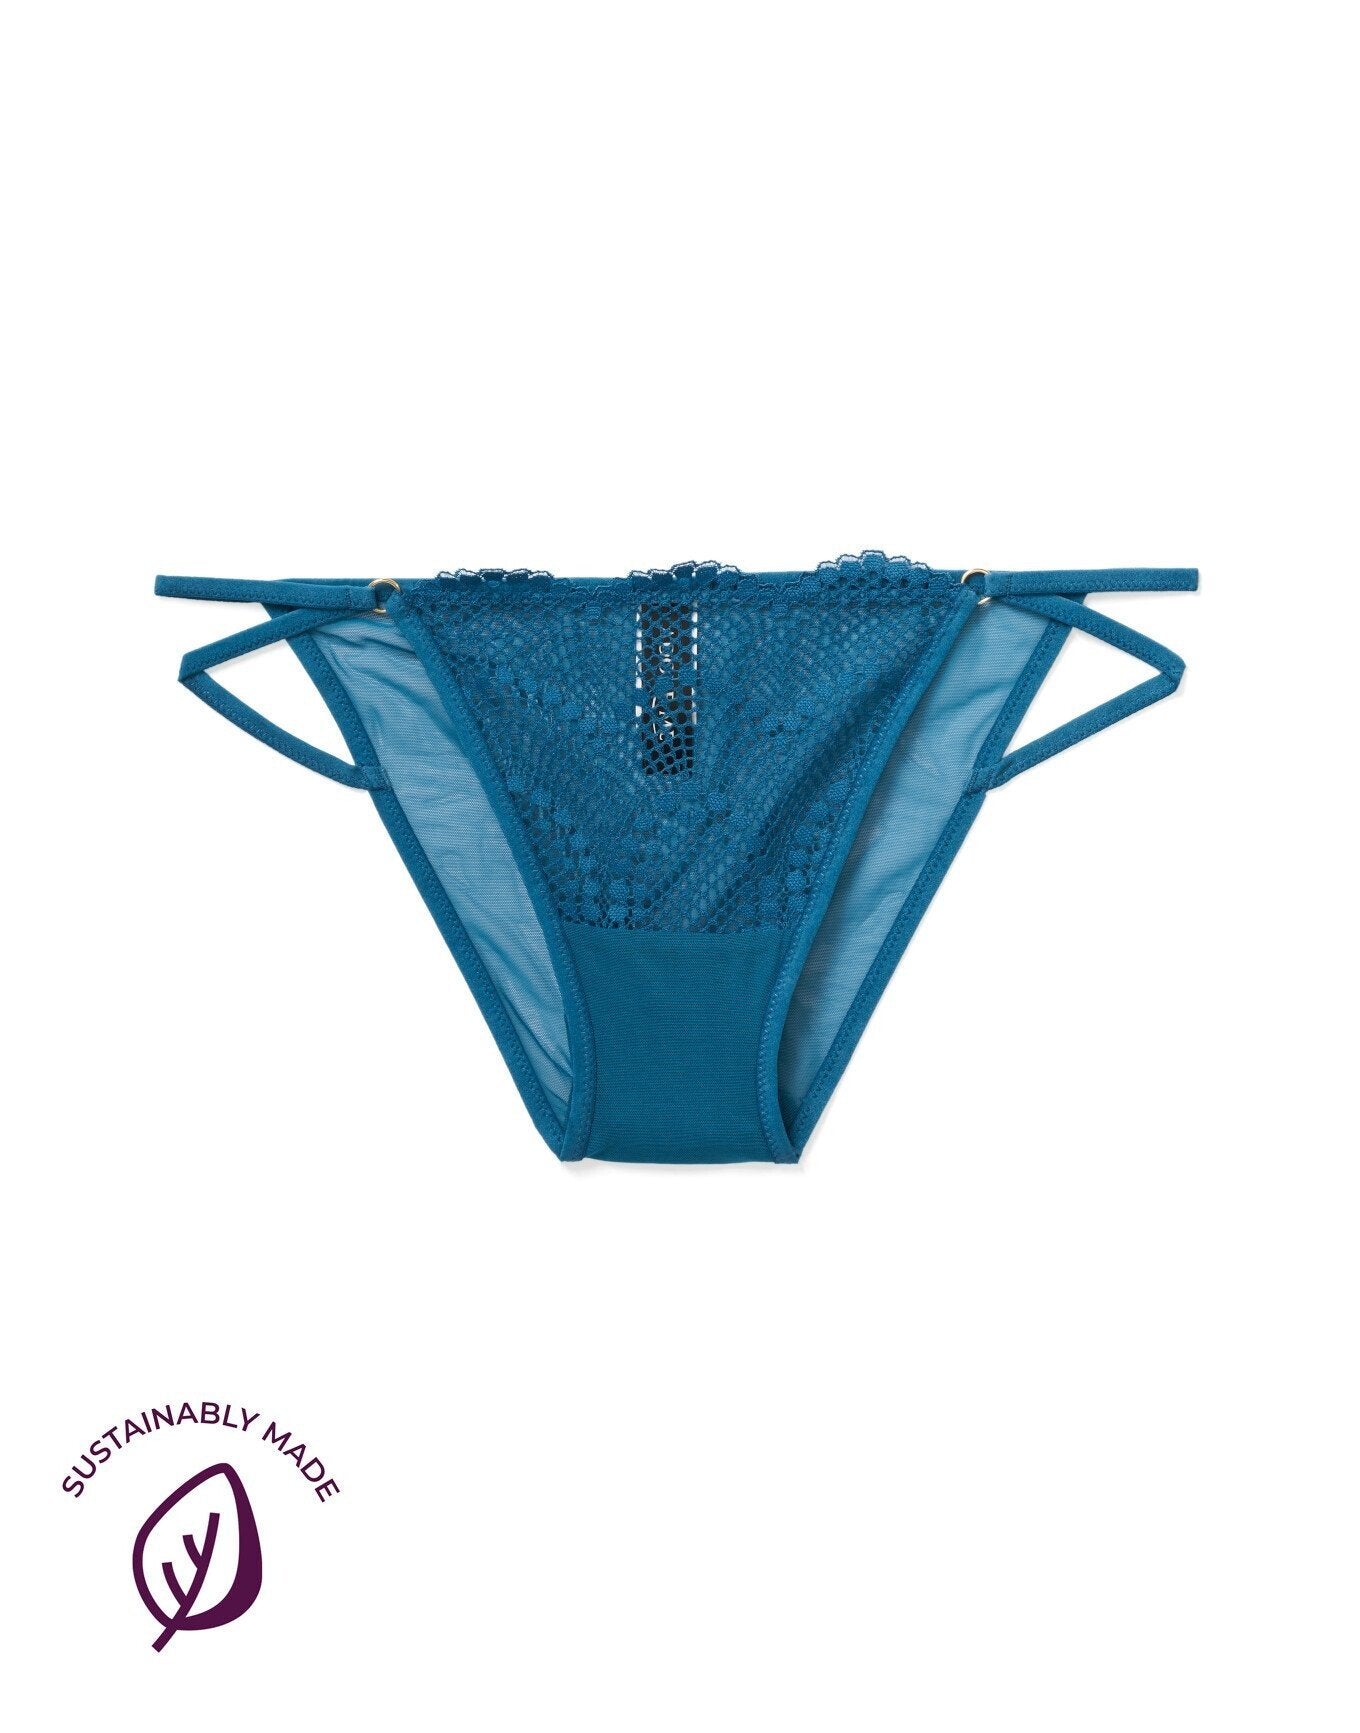 Adore Me Margaritte String Bikini in color Blue Sapphire and shape bikini